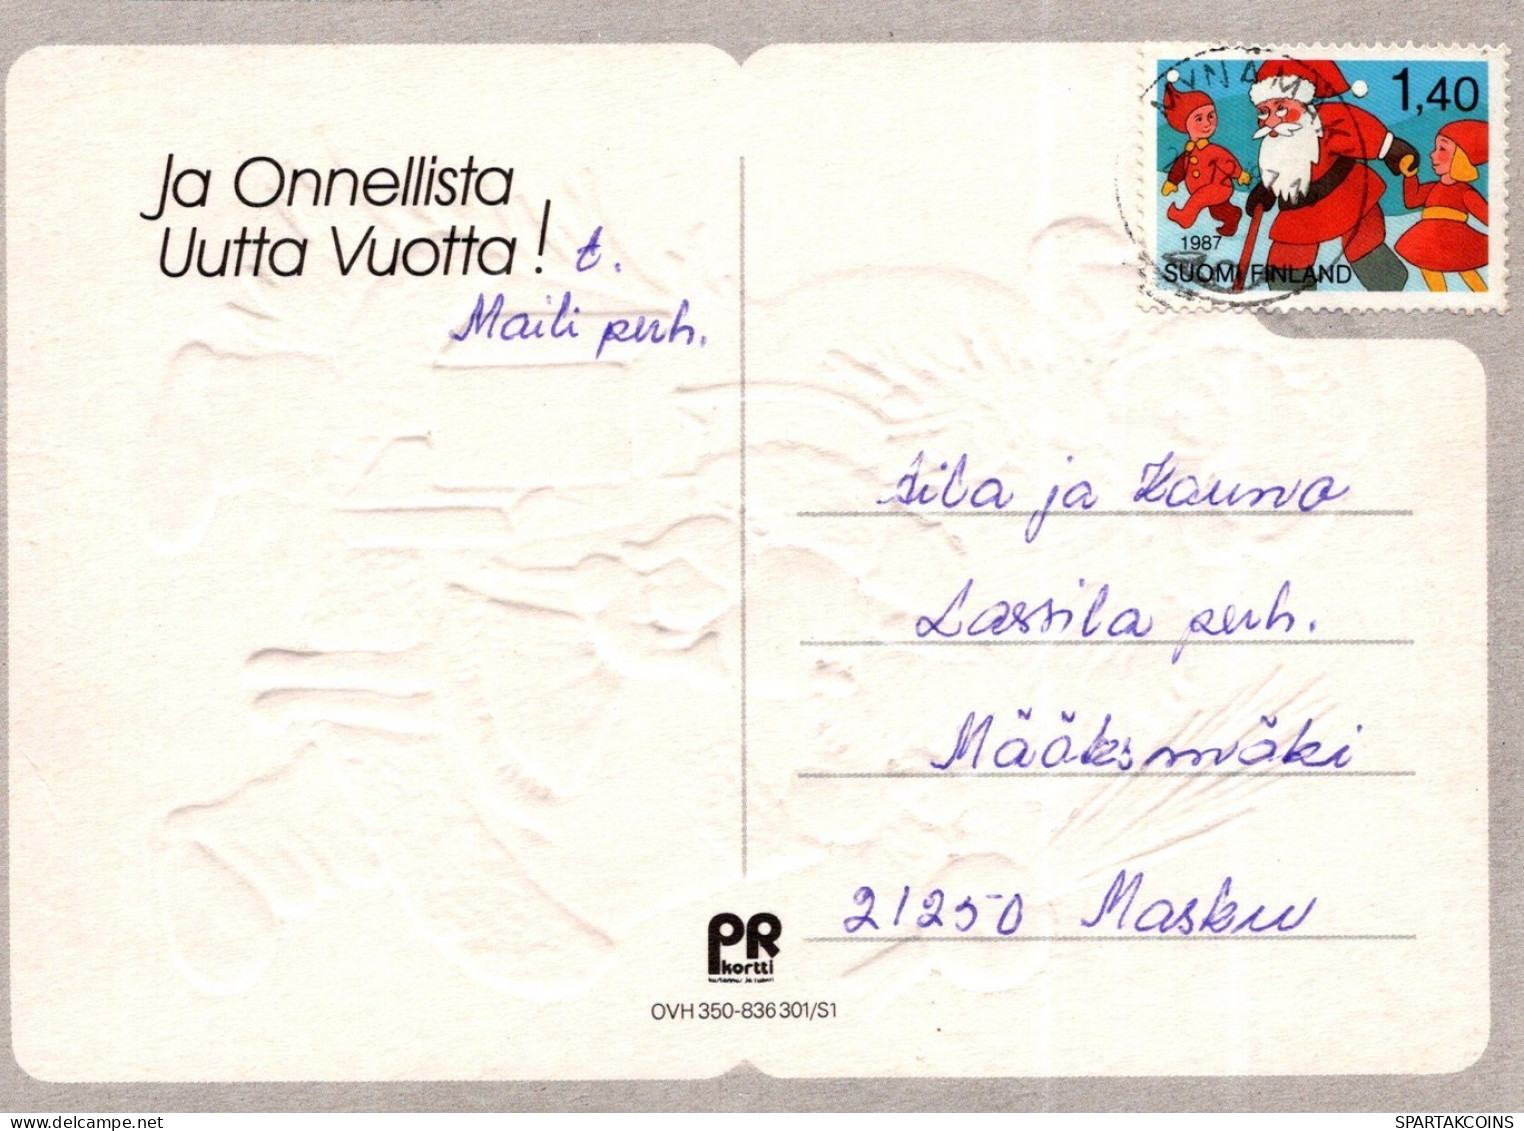 BABBO NATALE Natale Vintage Cartolina CPSM #PAJ683.IT - Santa Claus